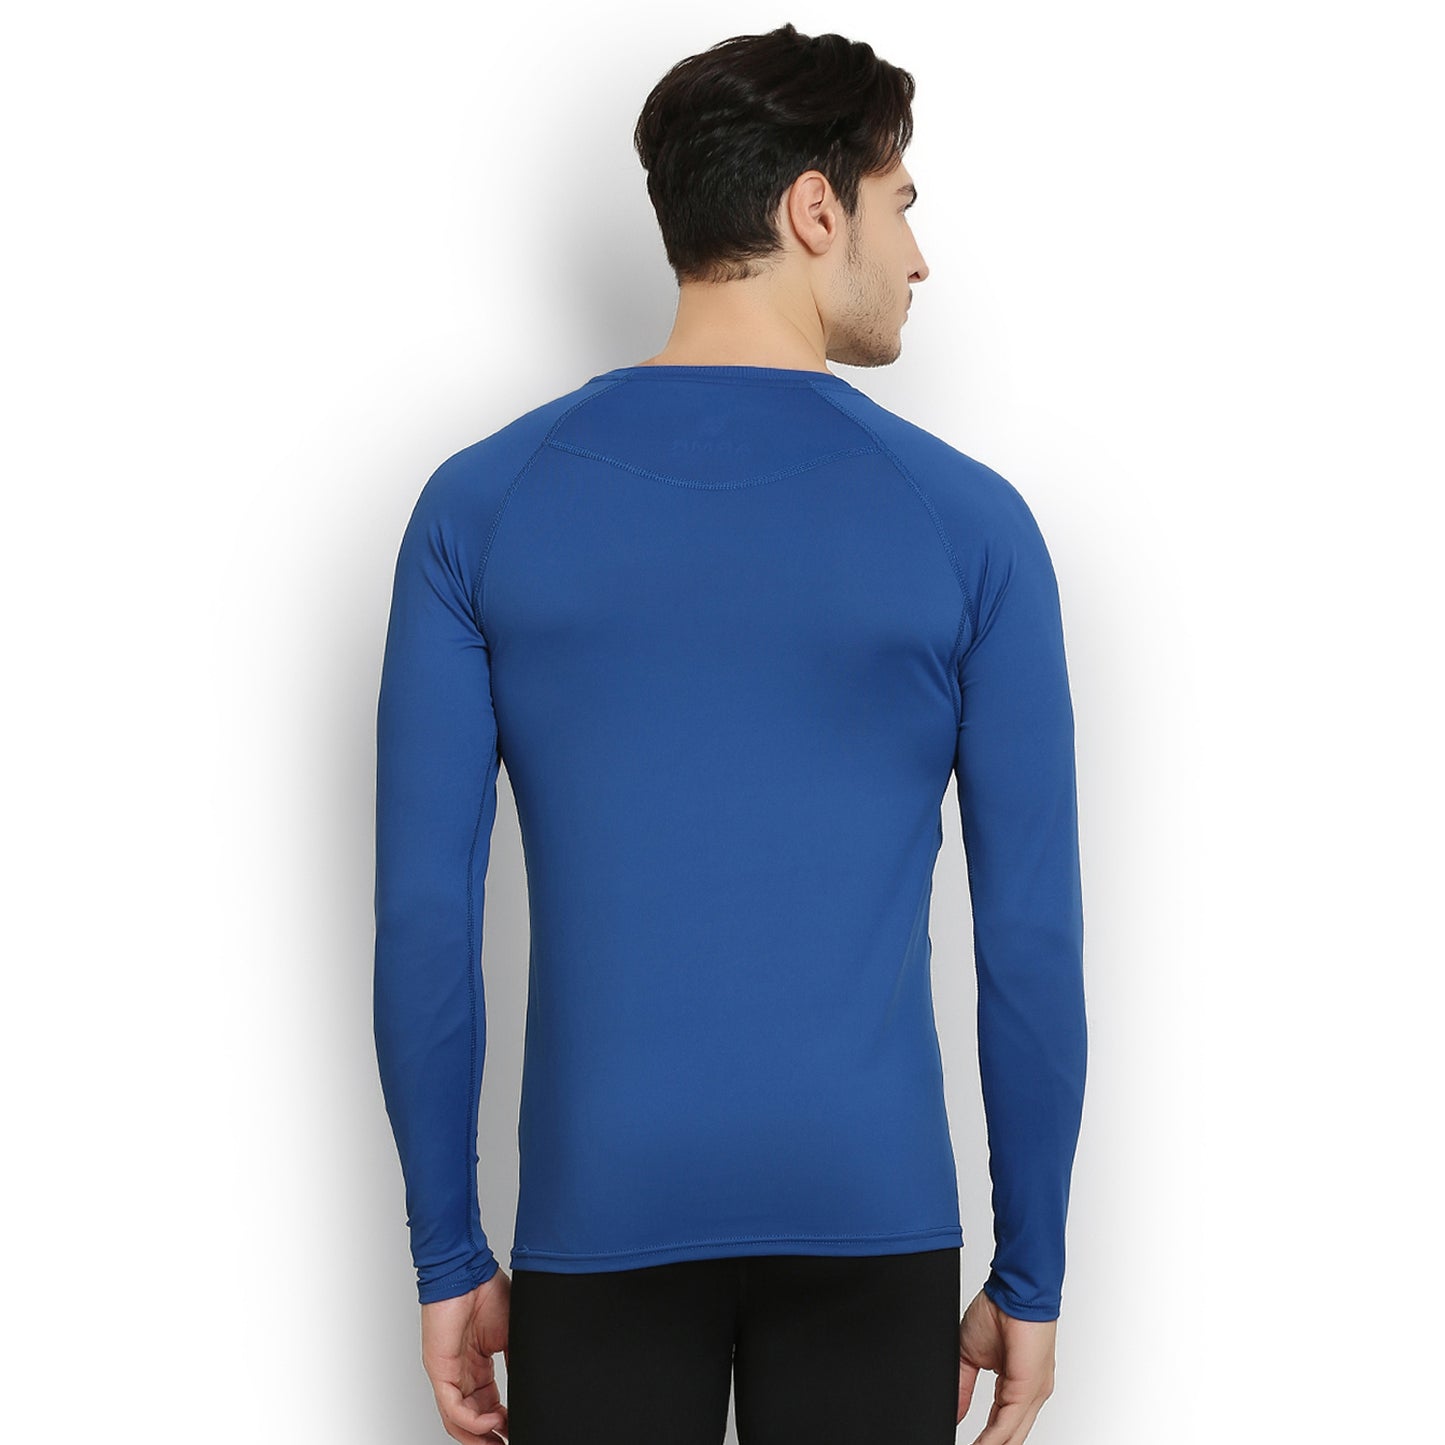 ARMR Unisex ROYAL BLUE SKYN Full-Sleeve T-shirt